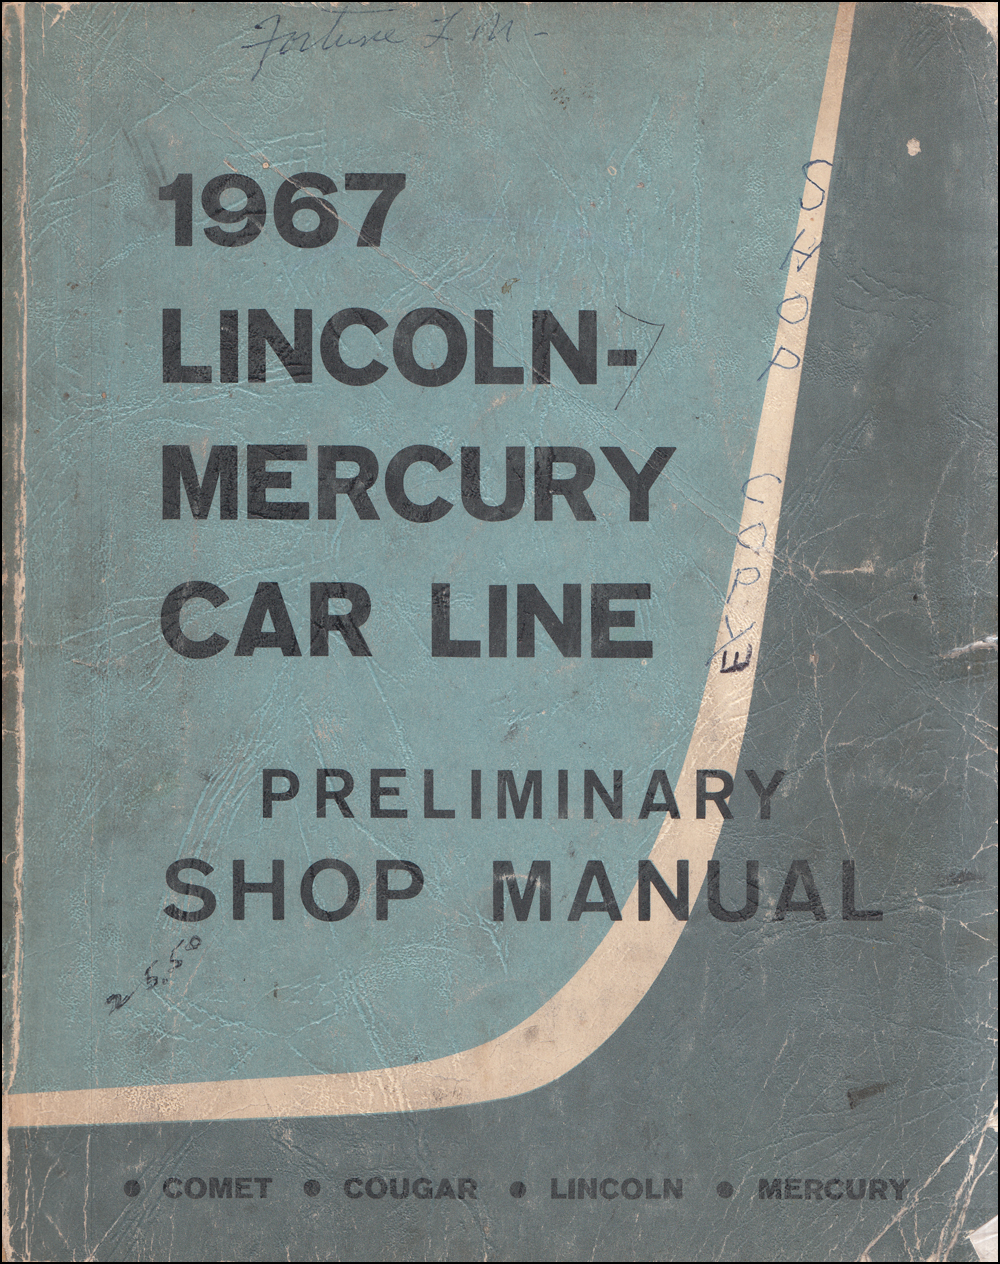 1970 Ford Maverick Original Preliminary Shop Manual